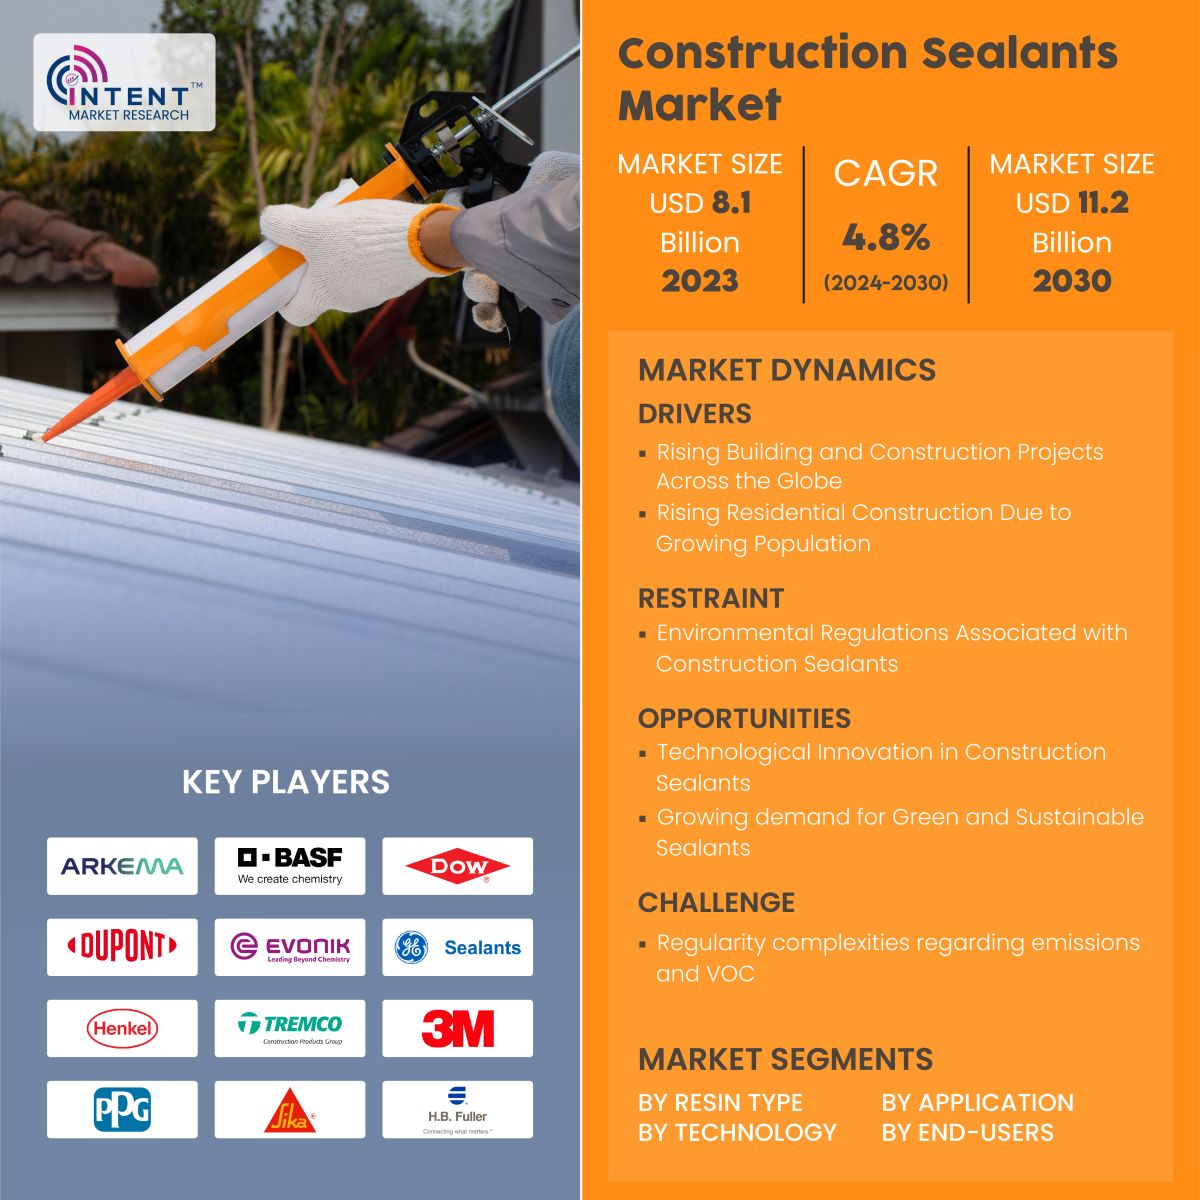 Construction Sealants Market Infoghraphics